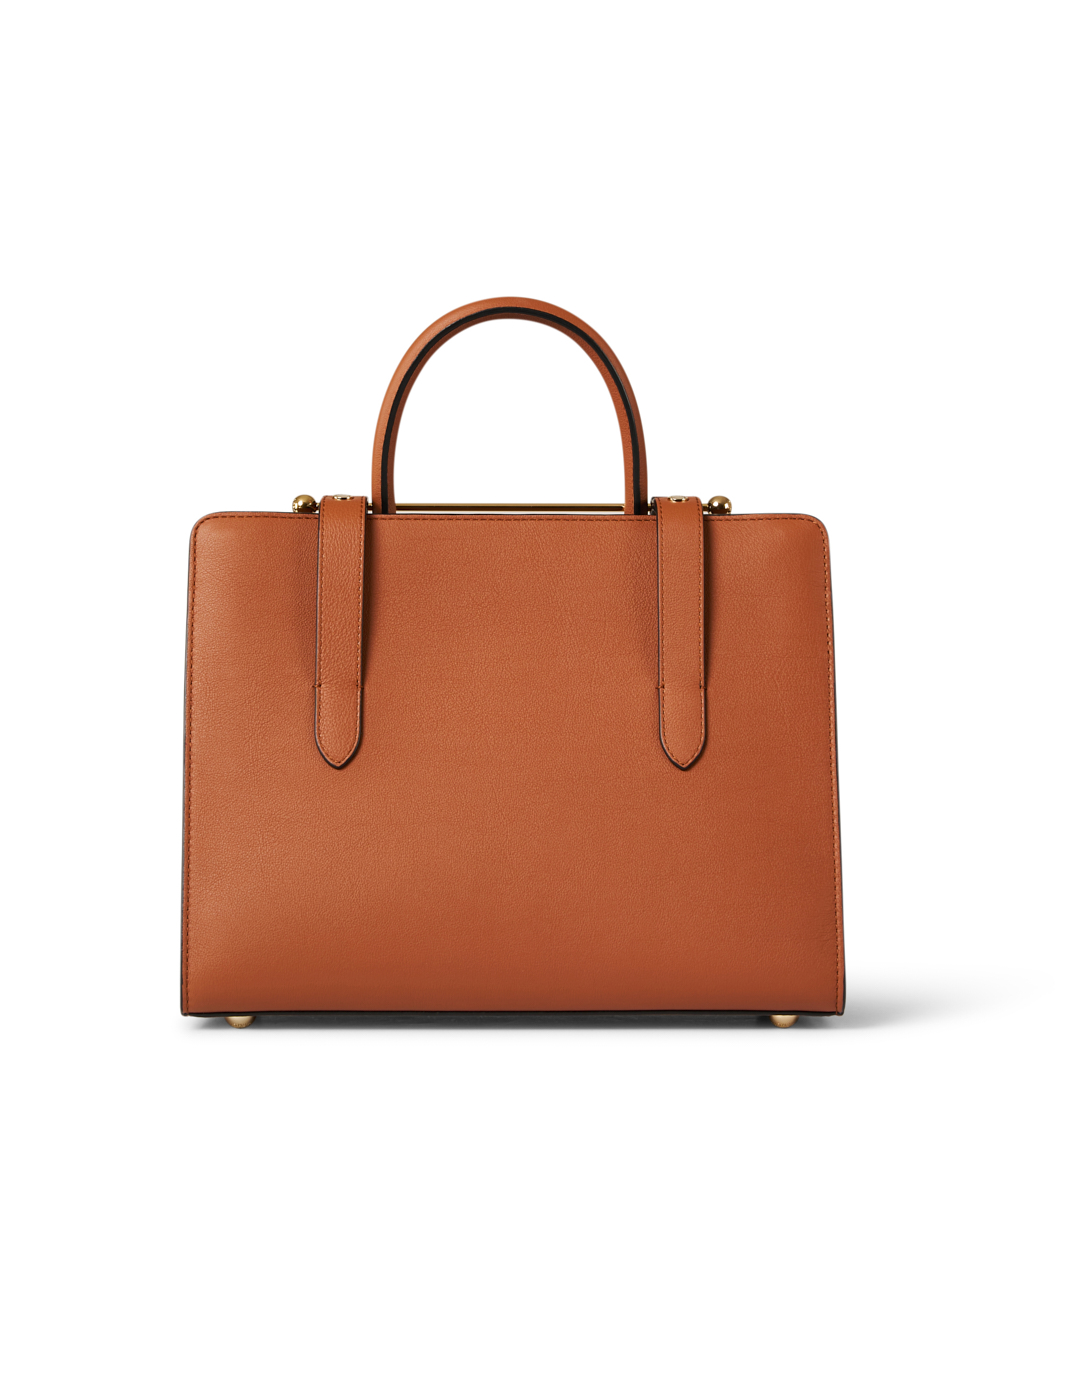 Strathberry Chestnut Brown Leather Tote Handbag